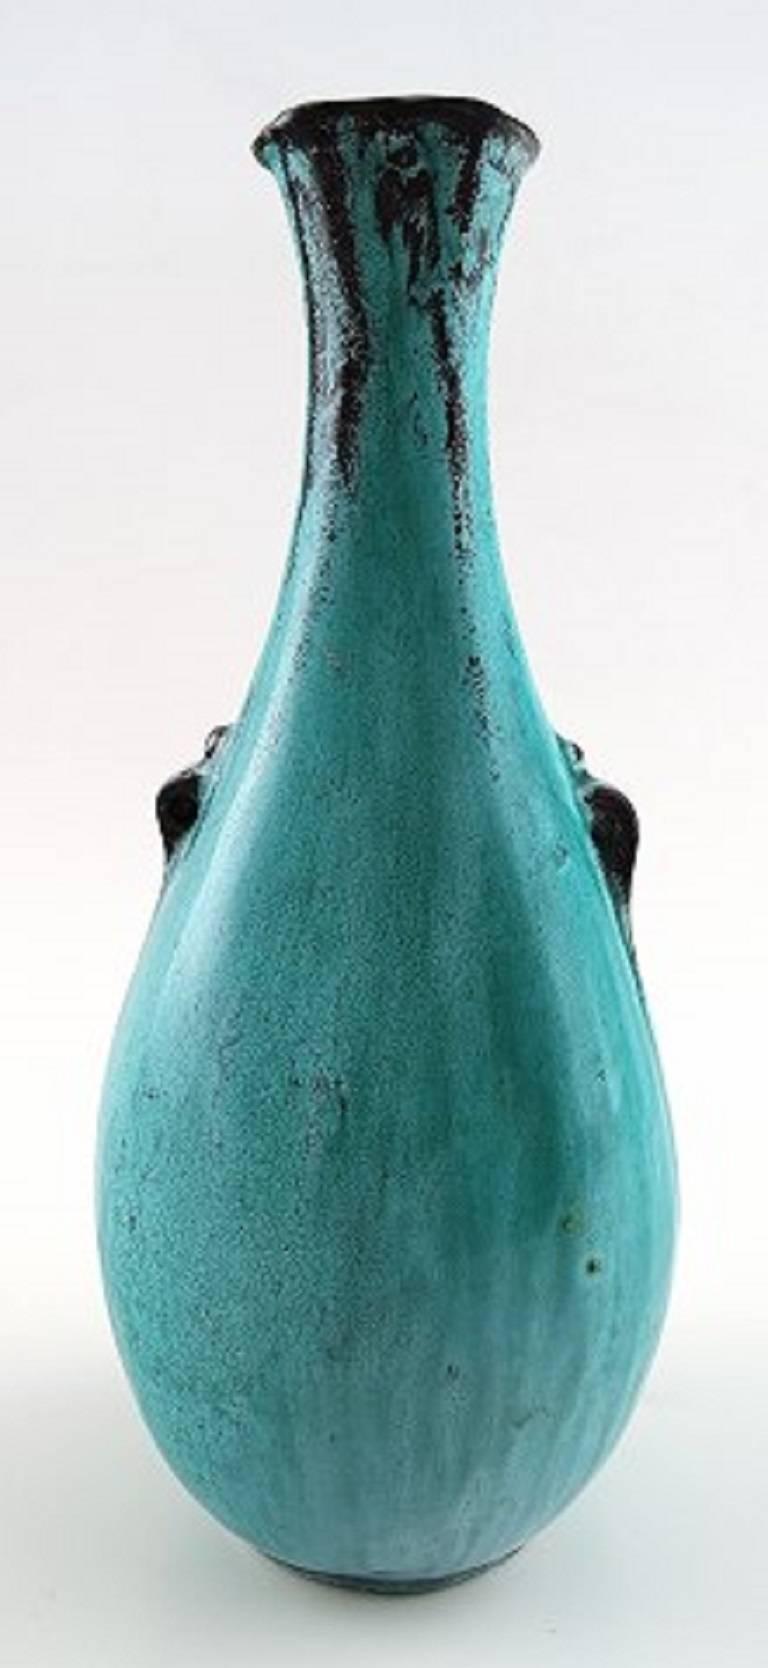 Svend Hammershoi for Kähler, HAK, glazed earthenware vase, 1930s.

Designed by Svend Hammershoi.

Turquoise Green double glaze.

Measures 20 cm.

Marked.

In perfect condition.